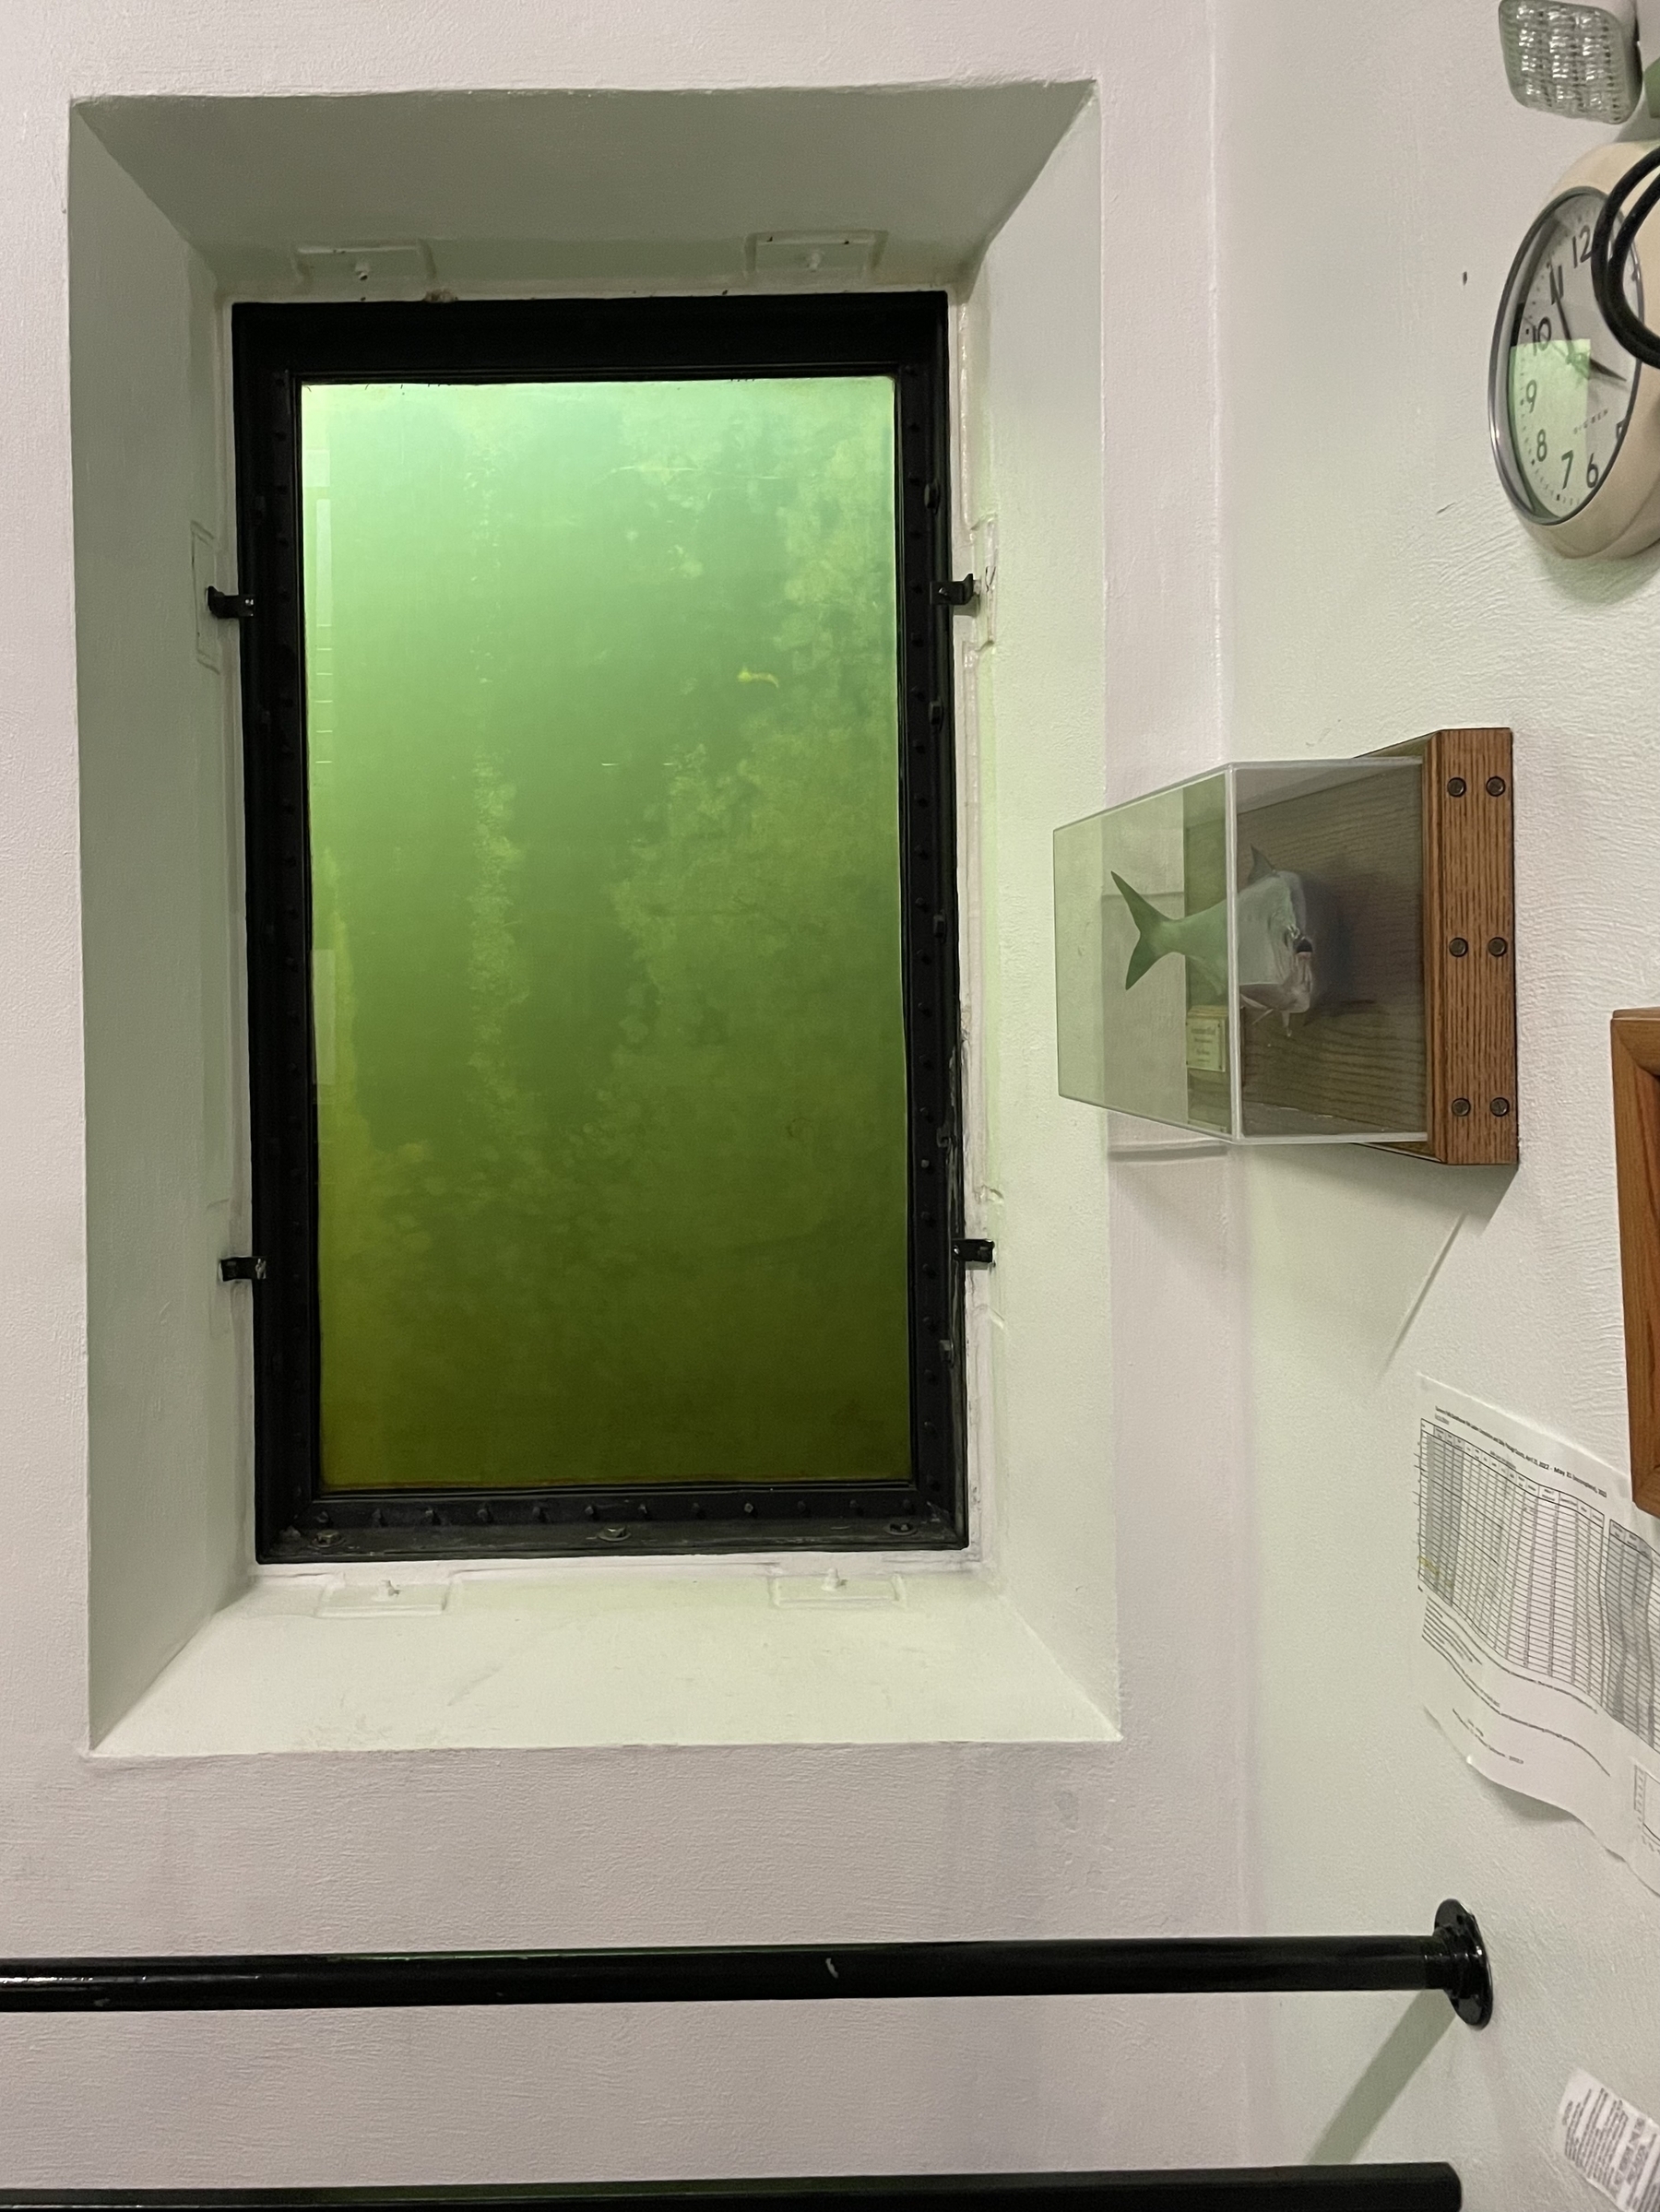 Underwater window at the fish ladder